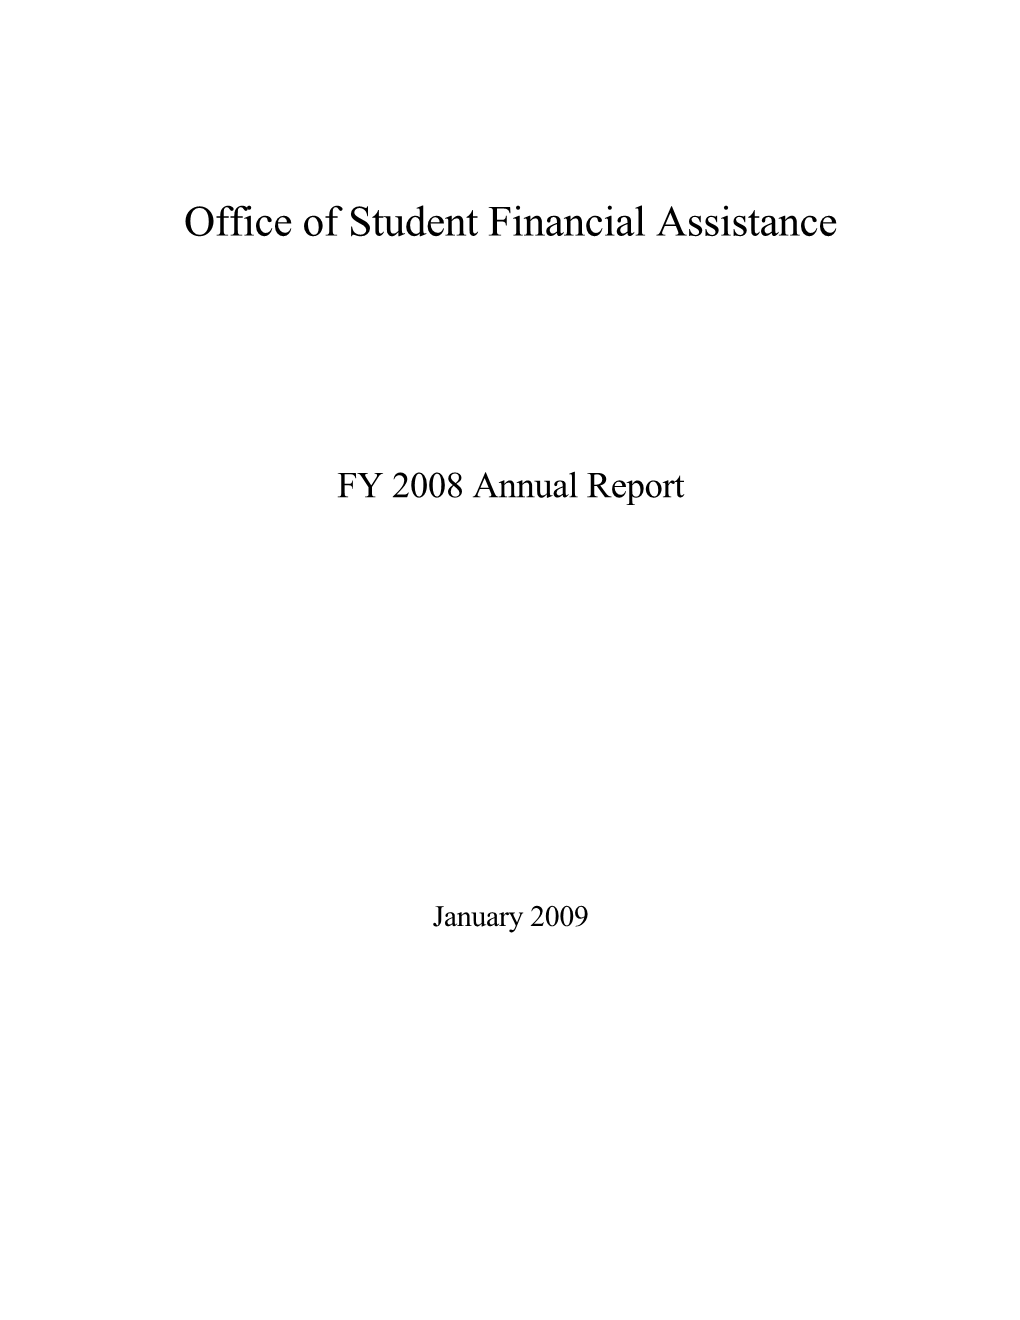 OSFA Annual Report FY 2008